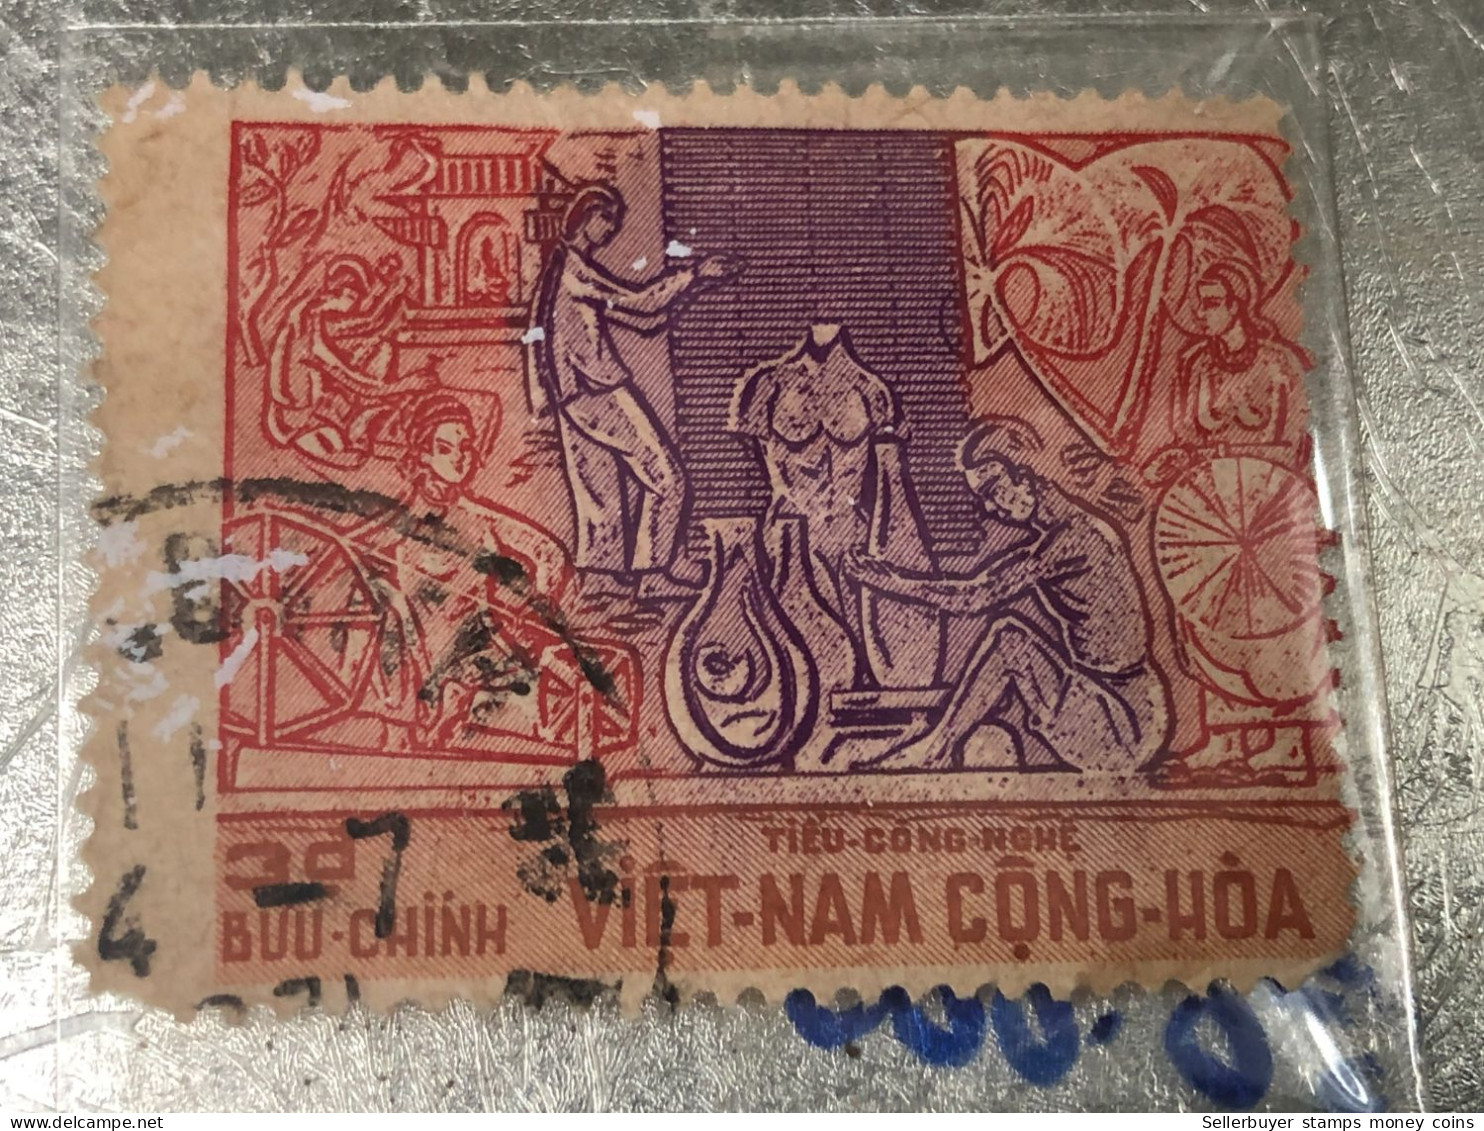 SOUTH VIETNAM Stamps(1967-ARTISANAI-3d00) PRINT ERROR(ASKEW)1 STAMPS-vyre Rare - Viêt-Nam